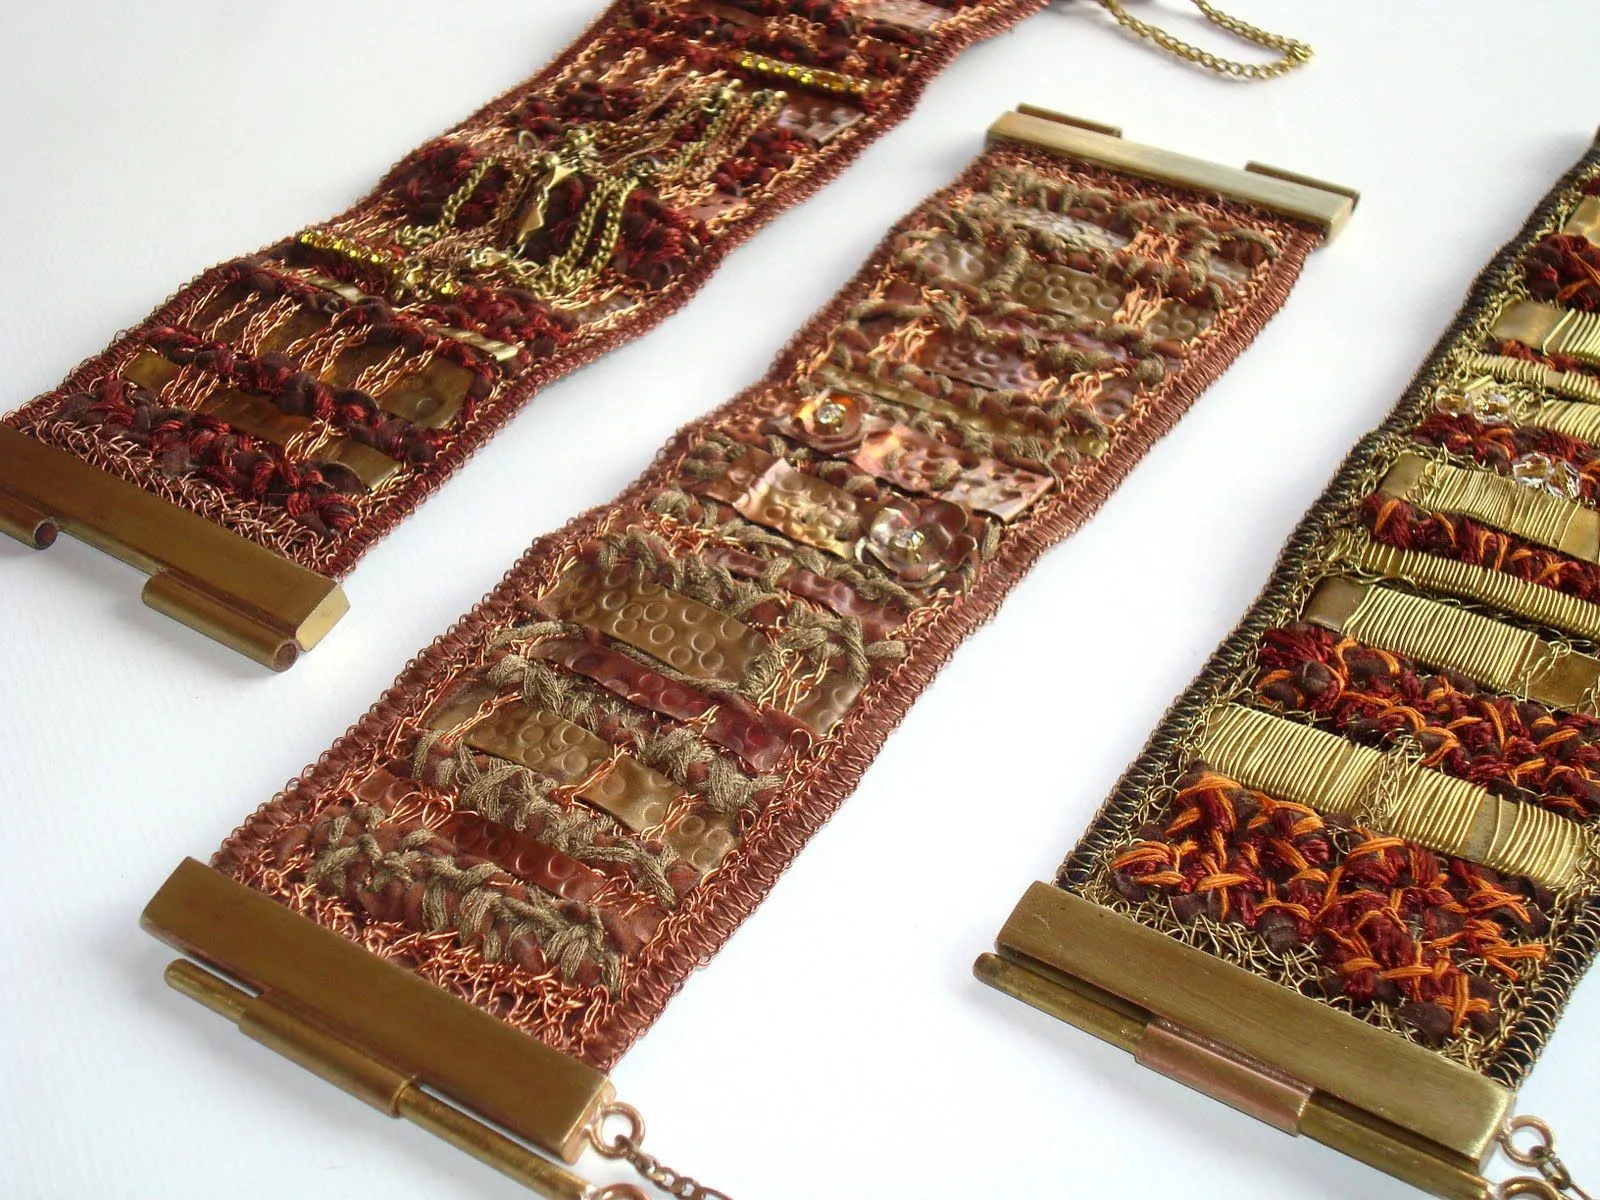 Pulseras de bronce e hilo de seda tejidas en telar manual